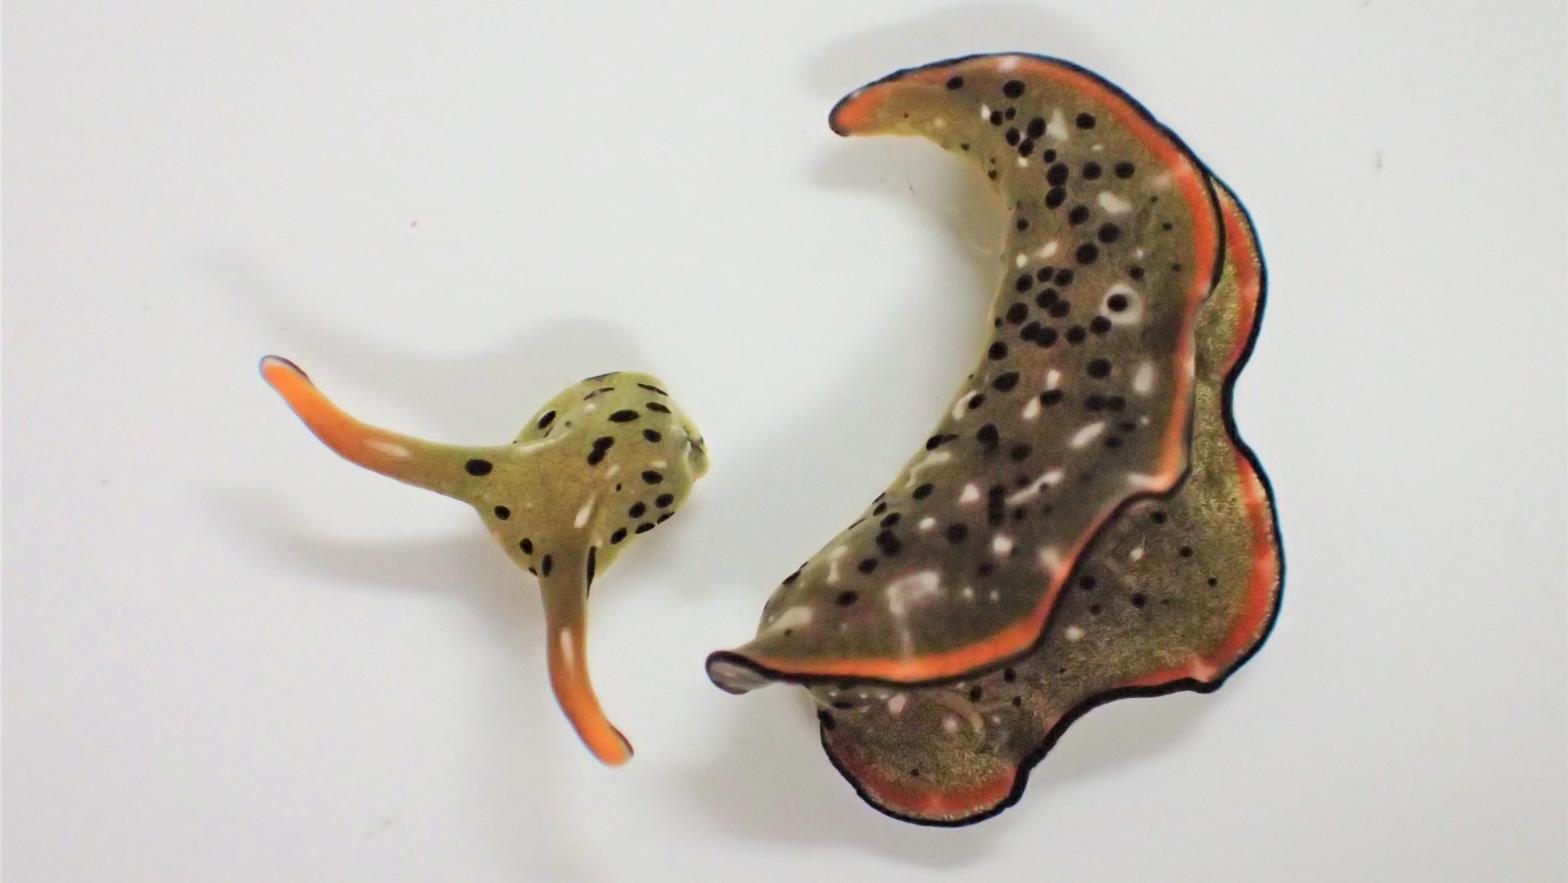 The head (left) and body (right) of a regenerative, photosynthetic sea slug. (Image: Sayaka Mitoh)